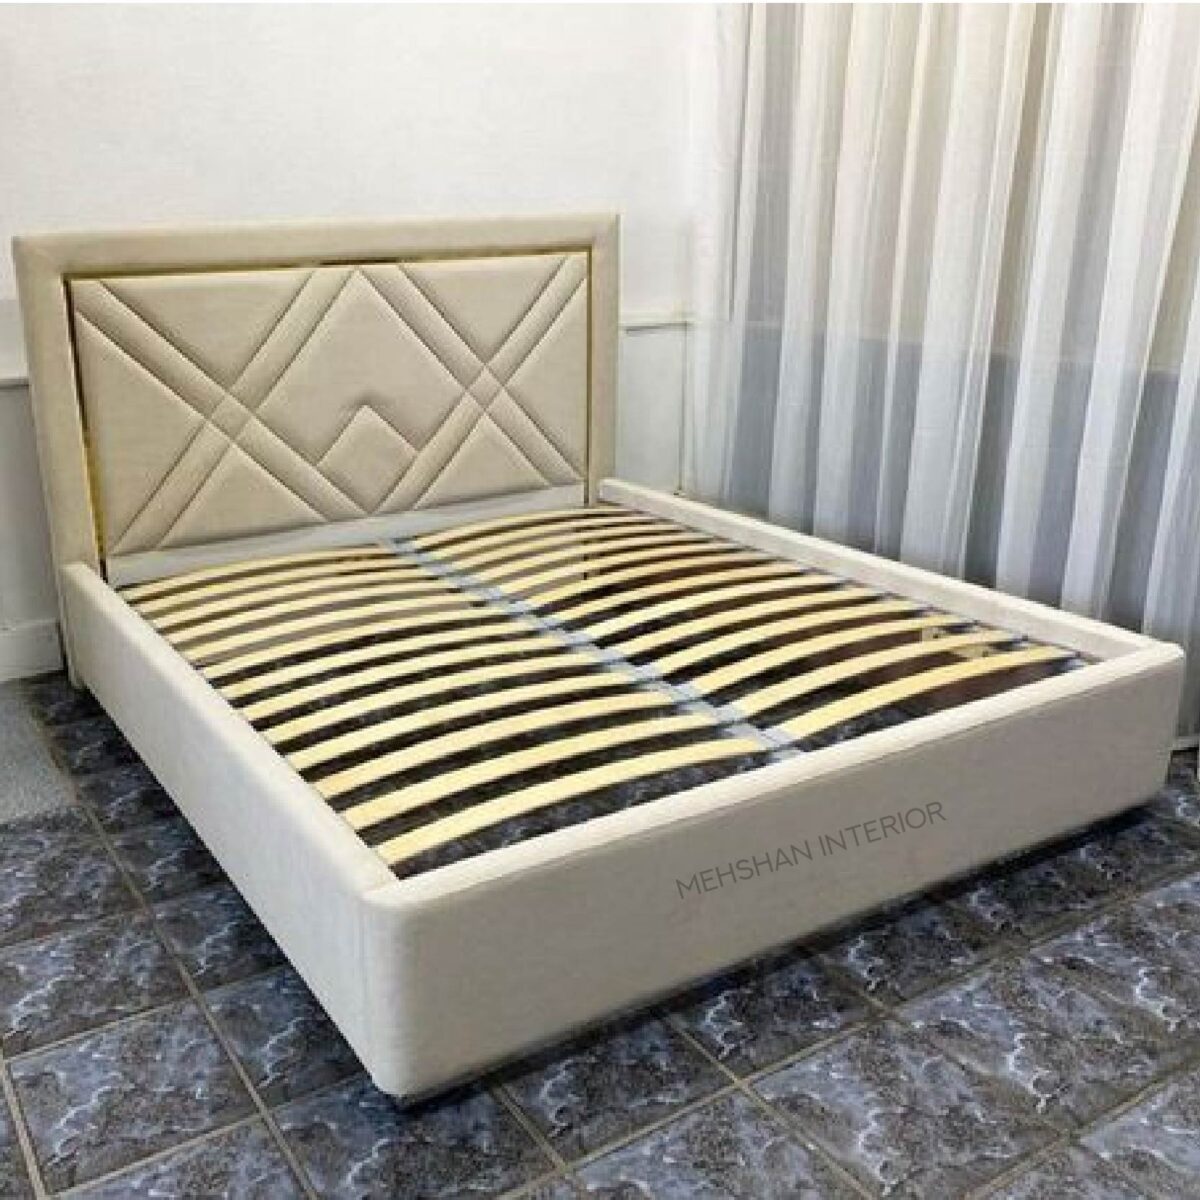 Queen size bed sizes | Elegant Design